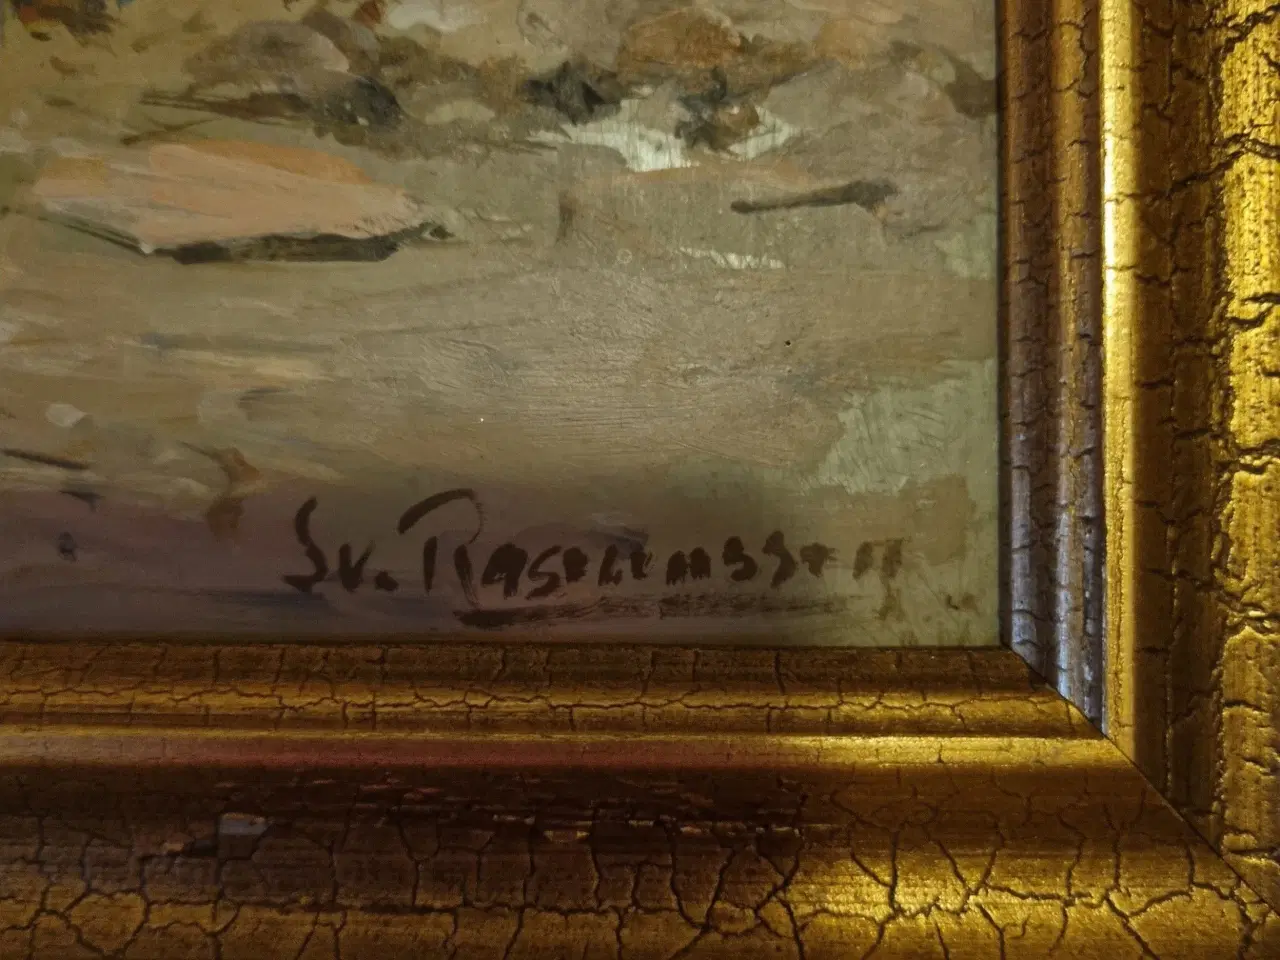 Billede 2 - Sv. Rasmussen malerier